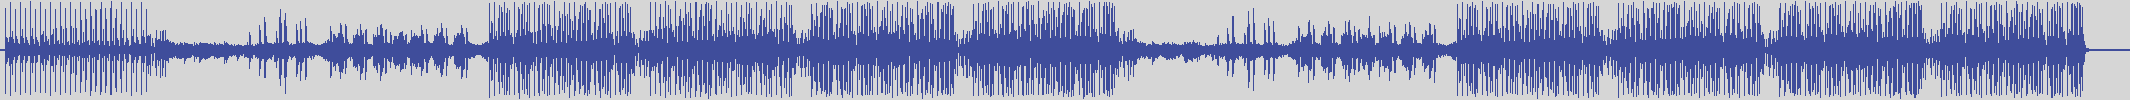 nf_boyz_records [NFY046] Deep System - Badadook [Sensation Mix] audio wave form